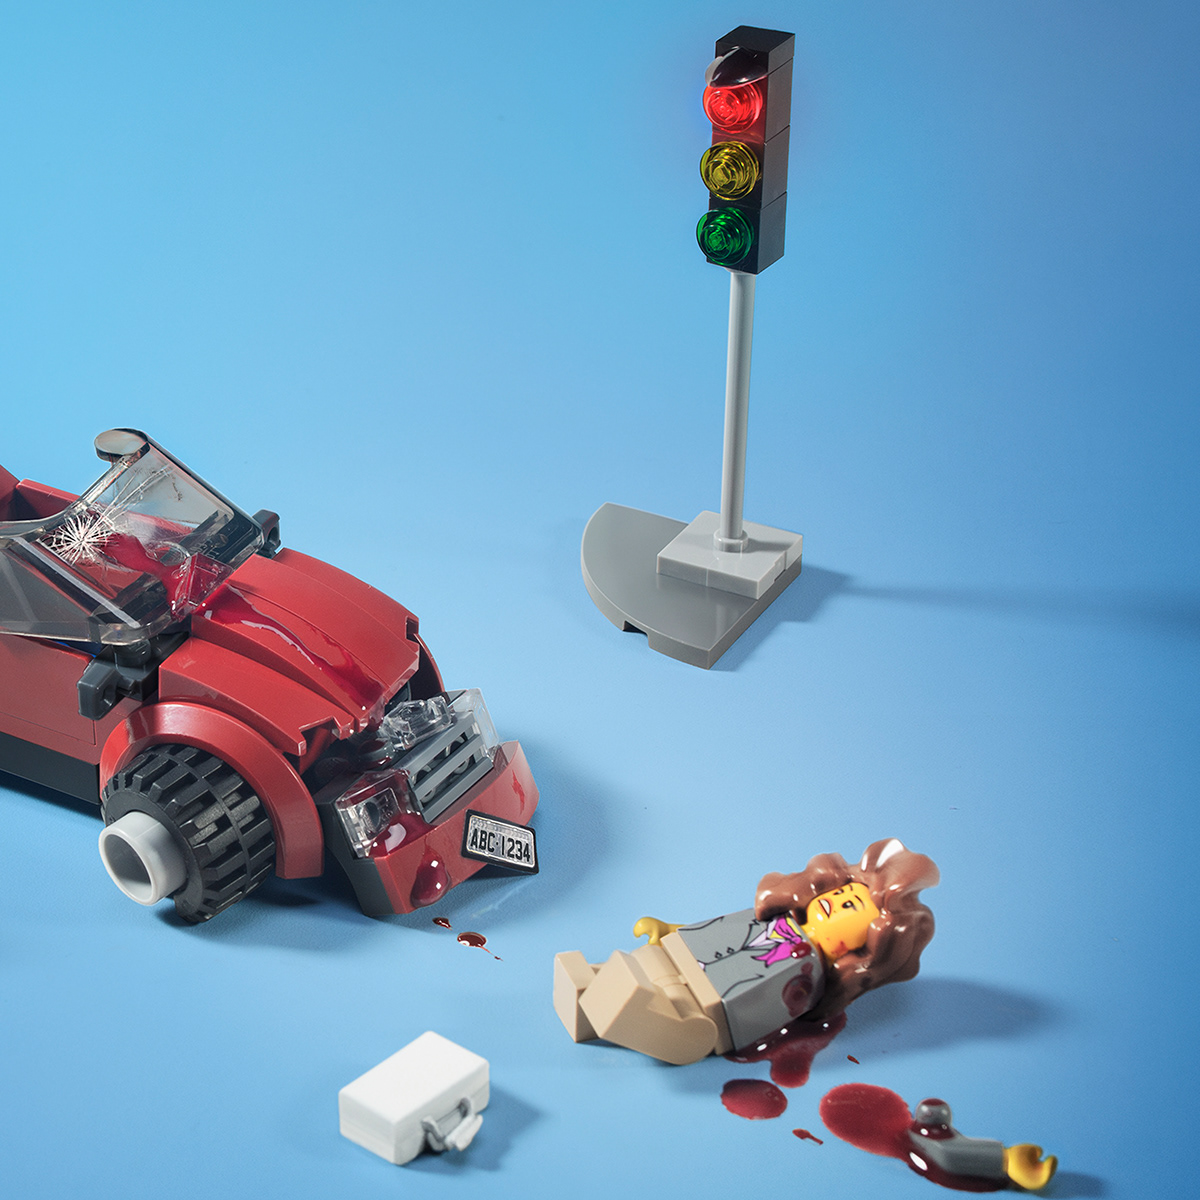 toys Cars photo LEGO playmobil crash Brazil toy EPTC porto alegre